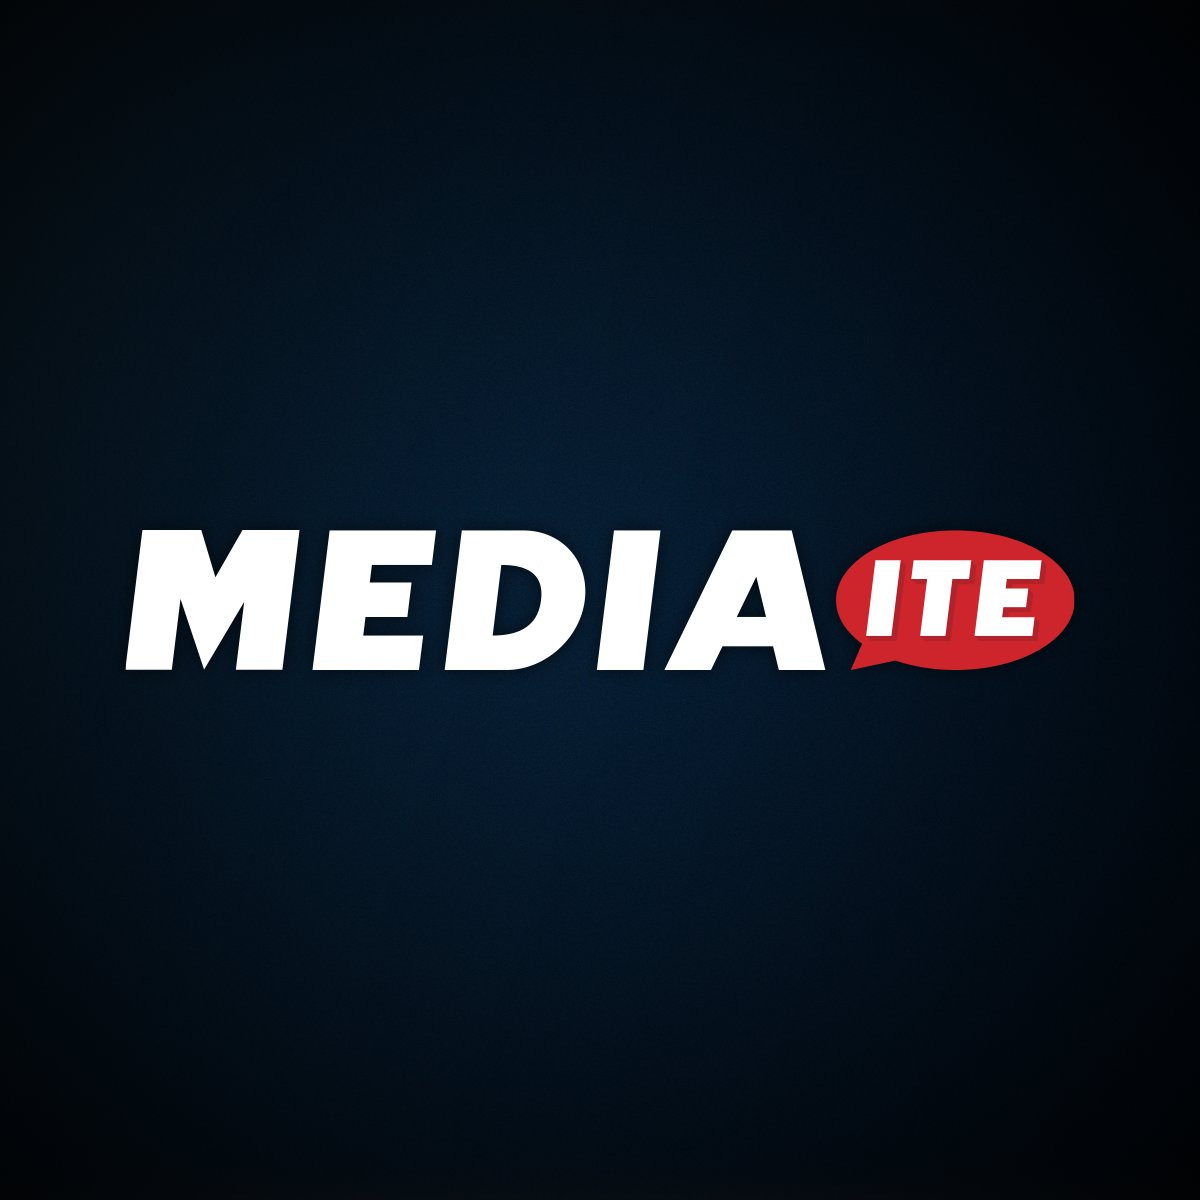 Mediaite.com | Media & Politics News | TV, Print, Online